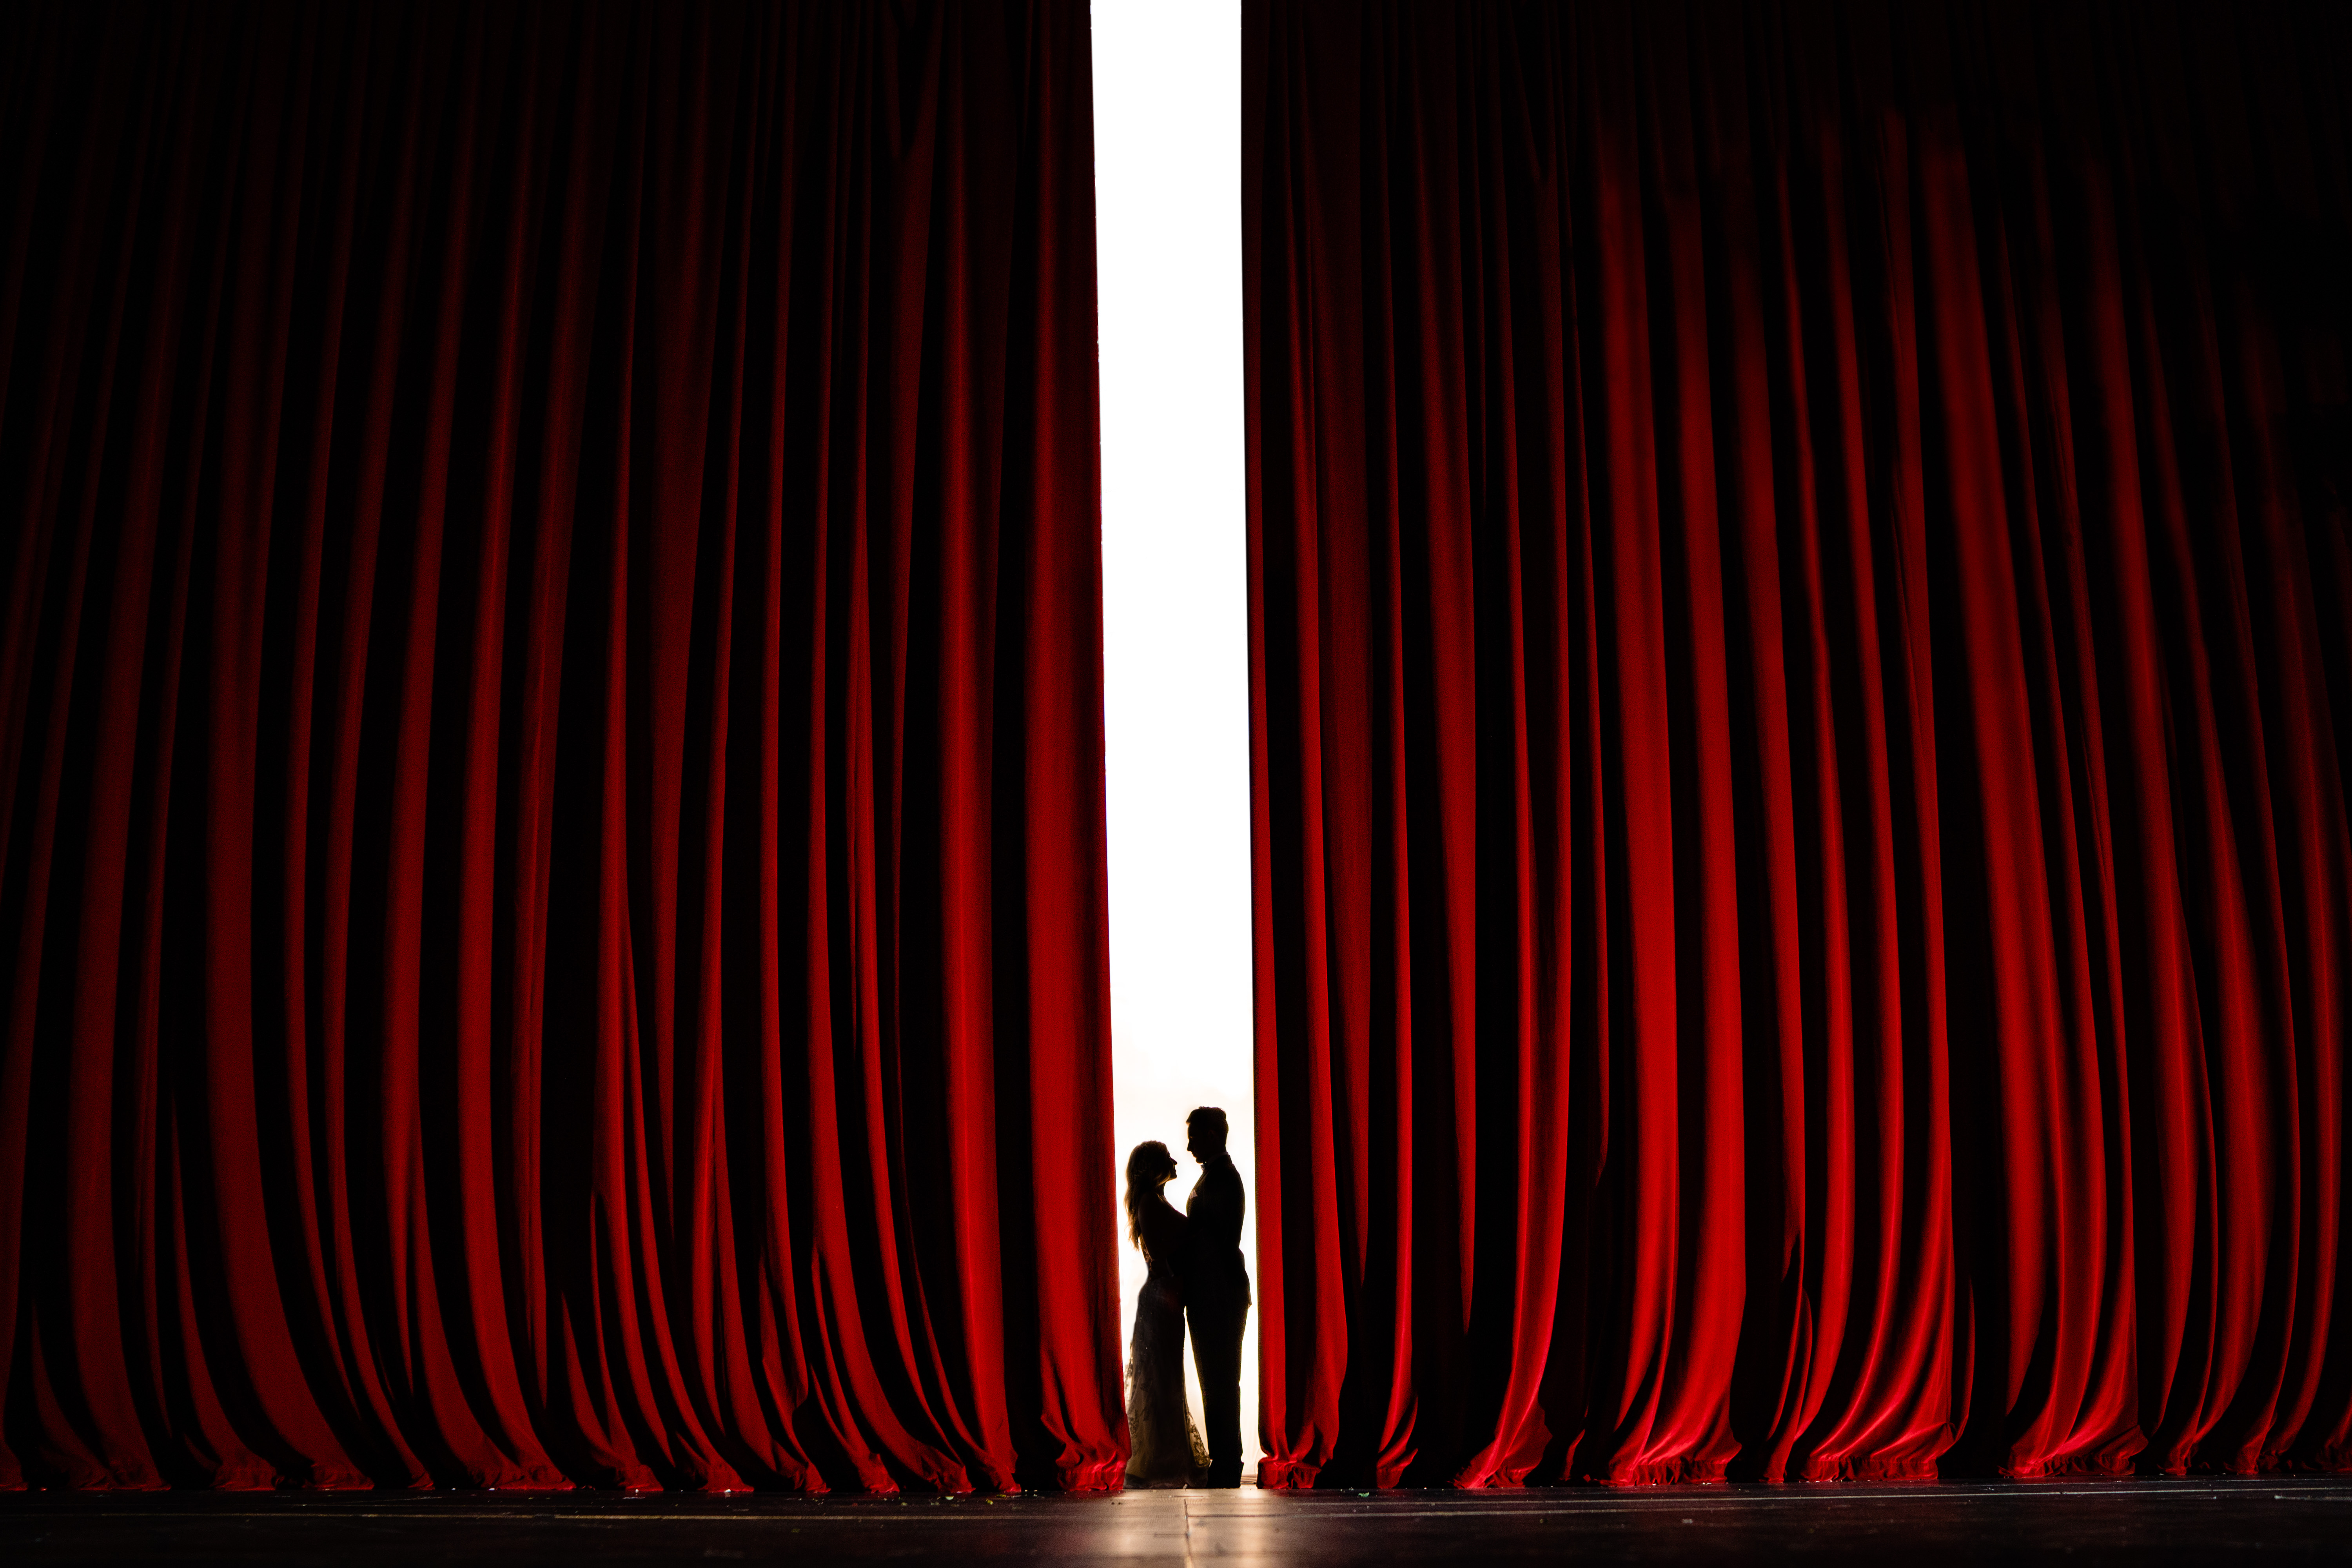 Walton Arts center wedding by Vinson Images - Northwest Arkansas Wedding photography - red curtain silhouette couple portrait